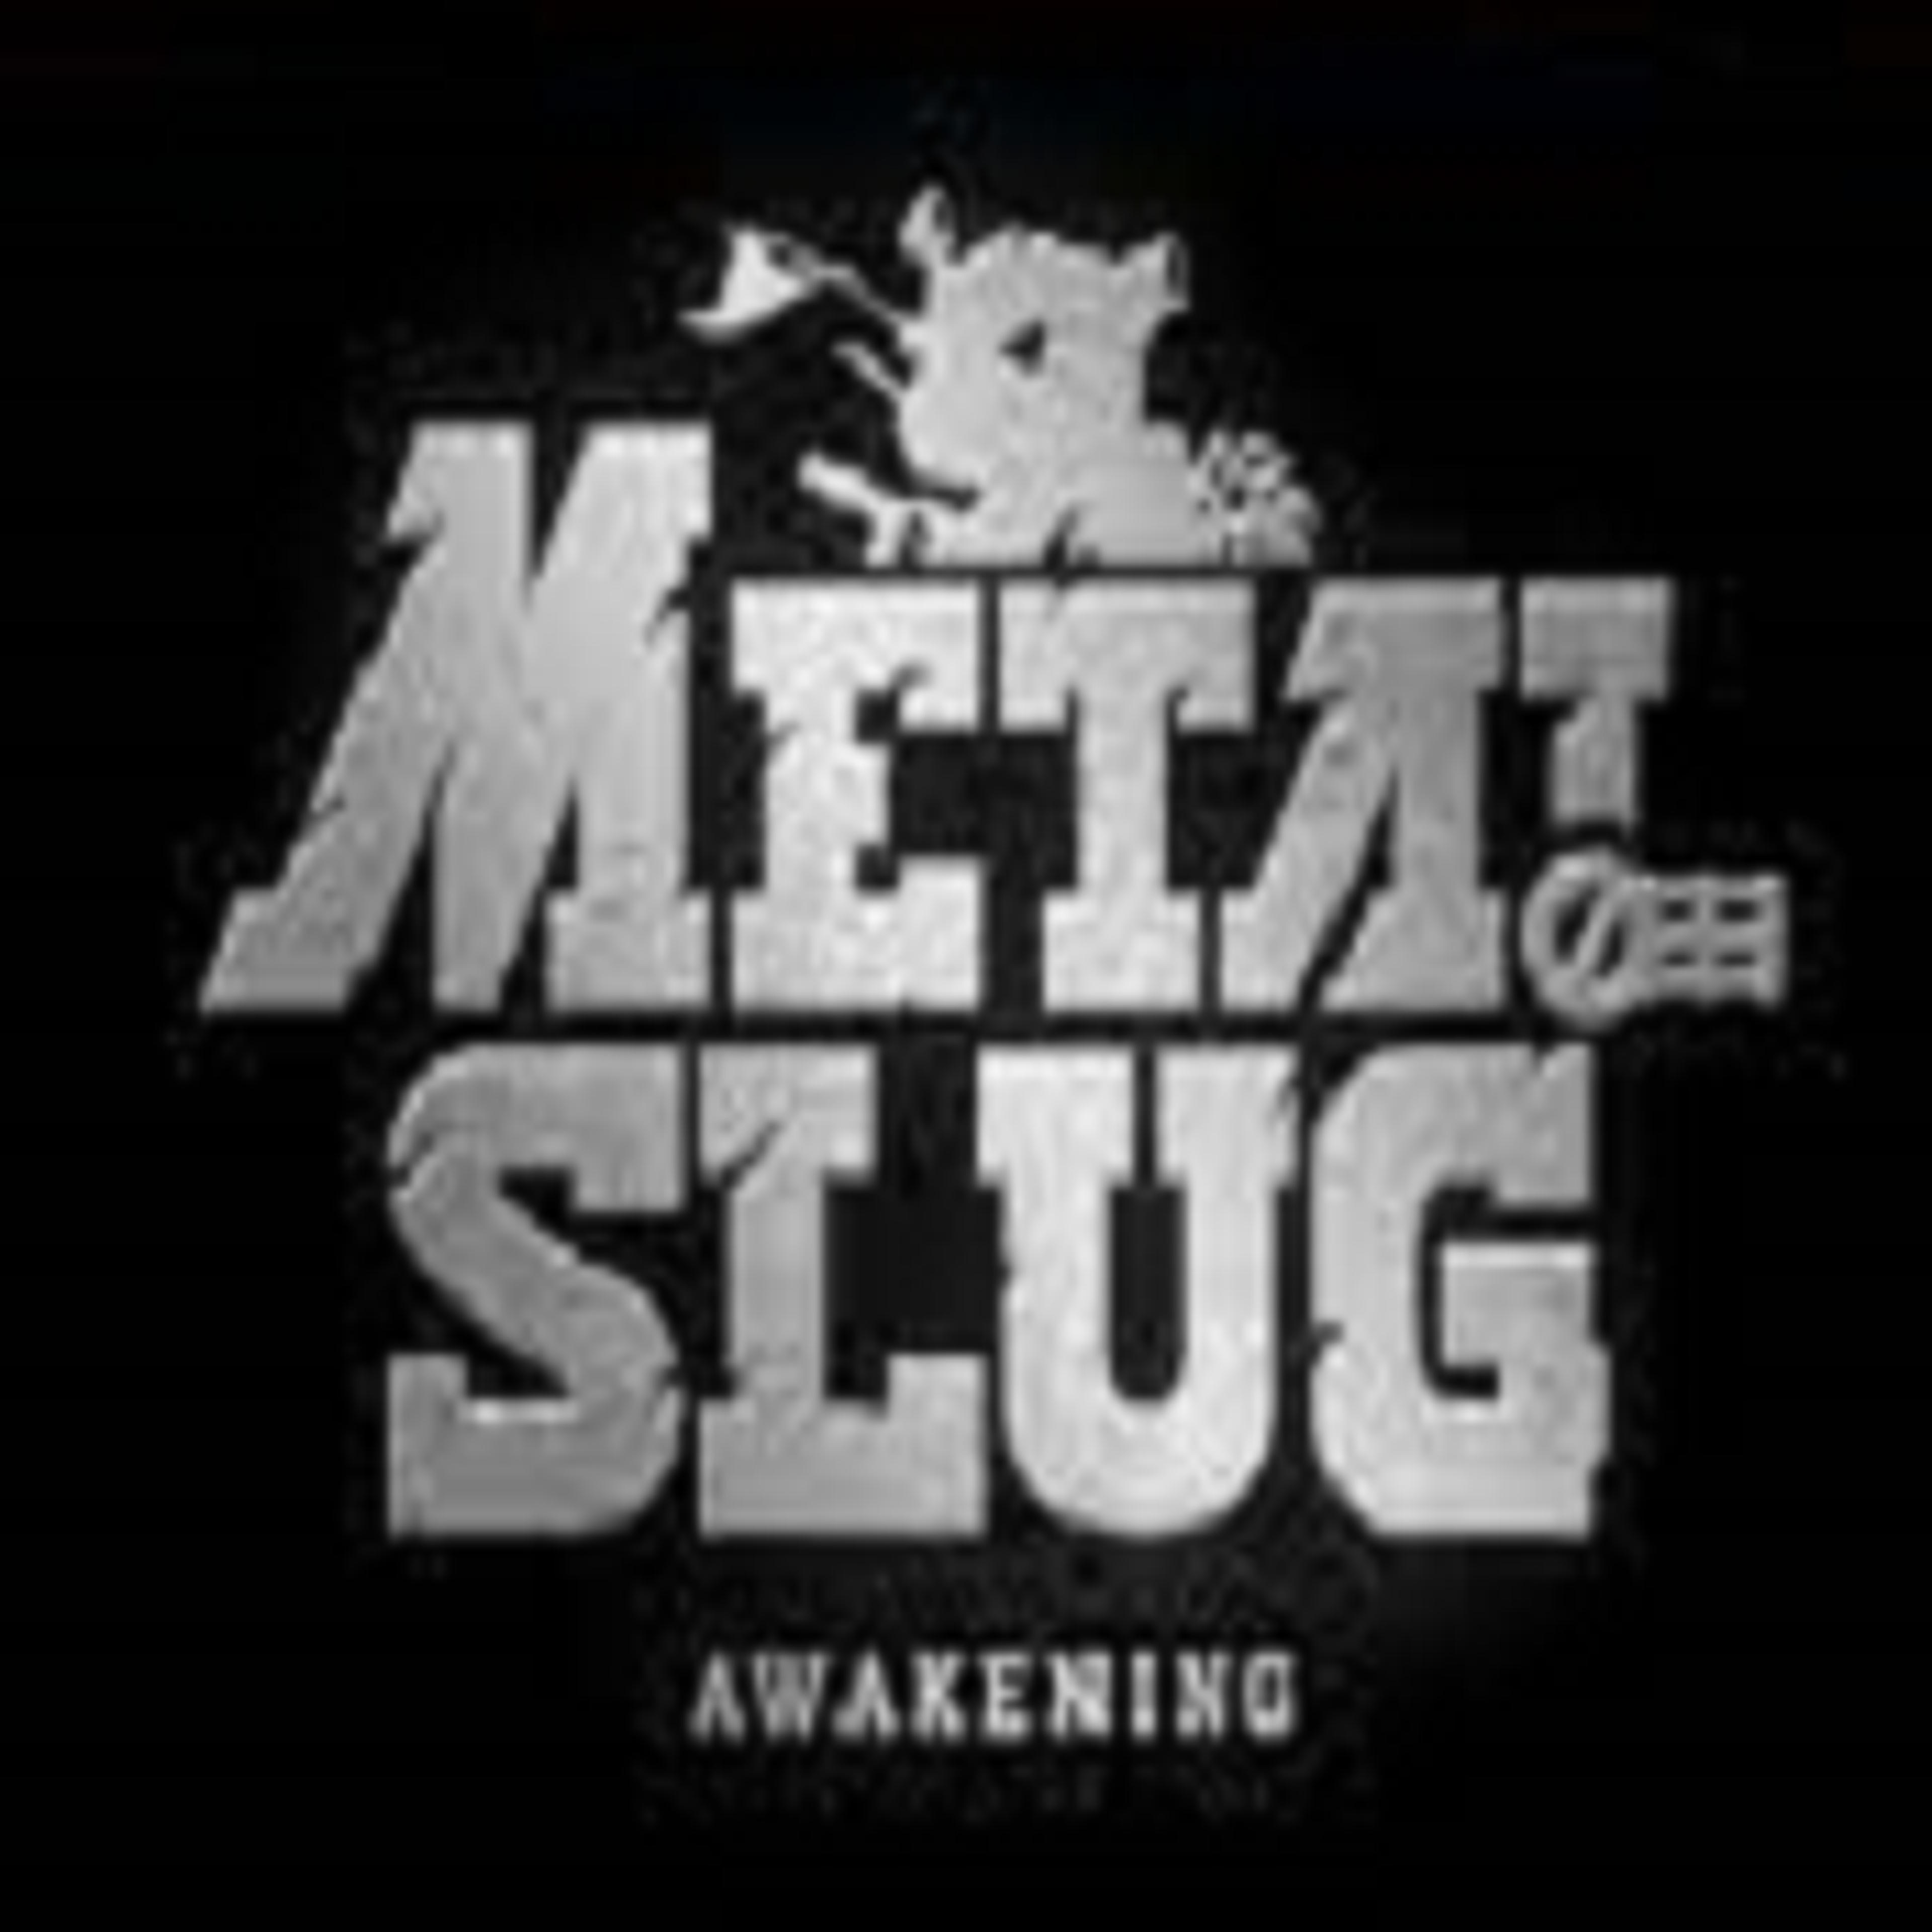 Metal Slug : Awakening